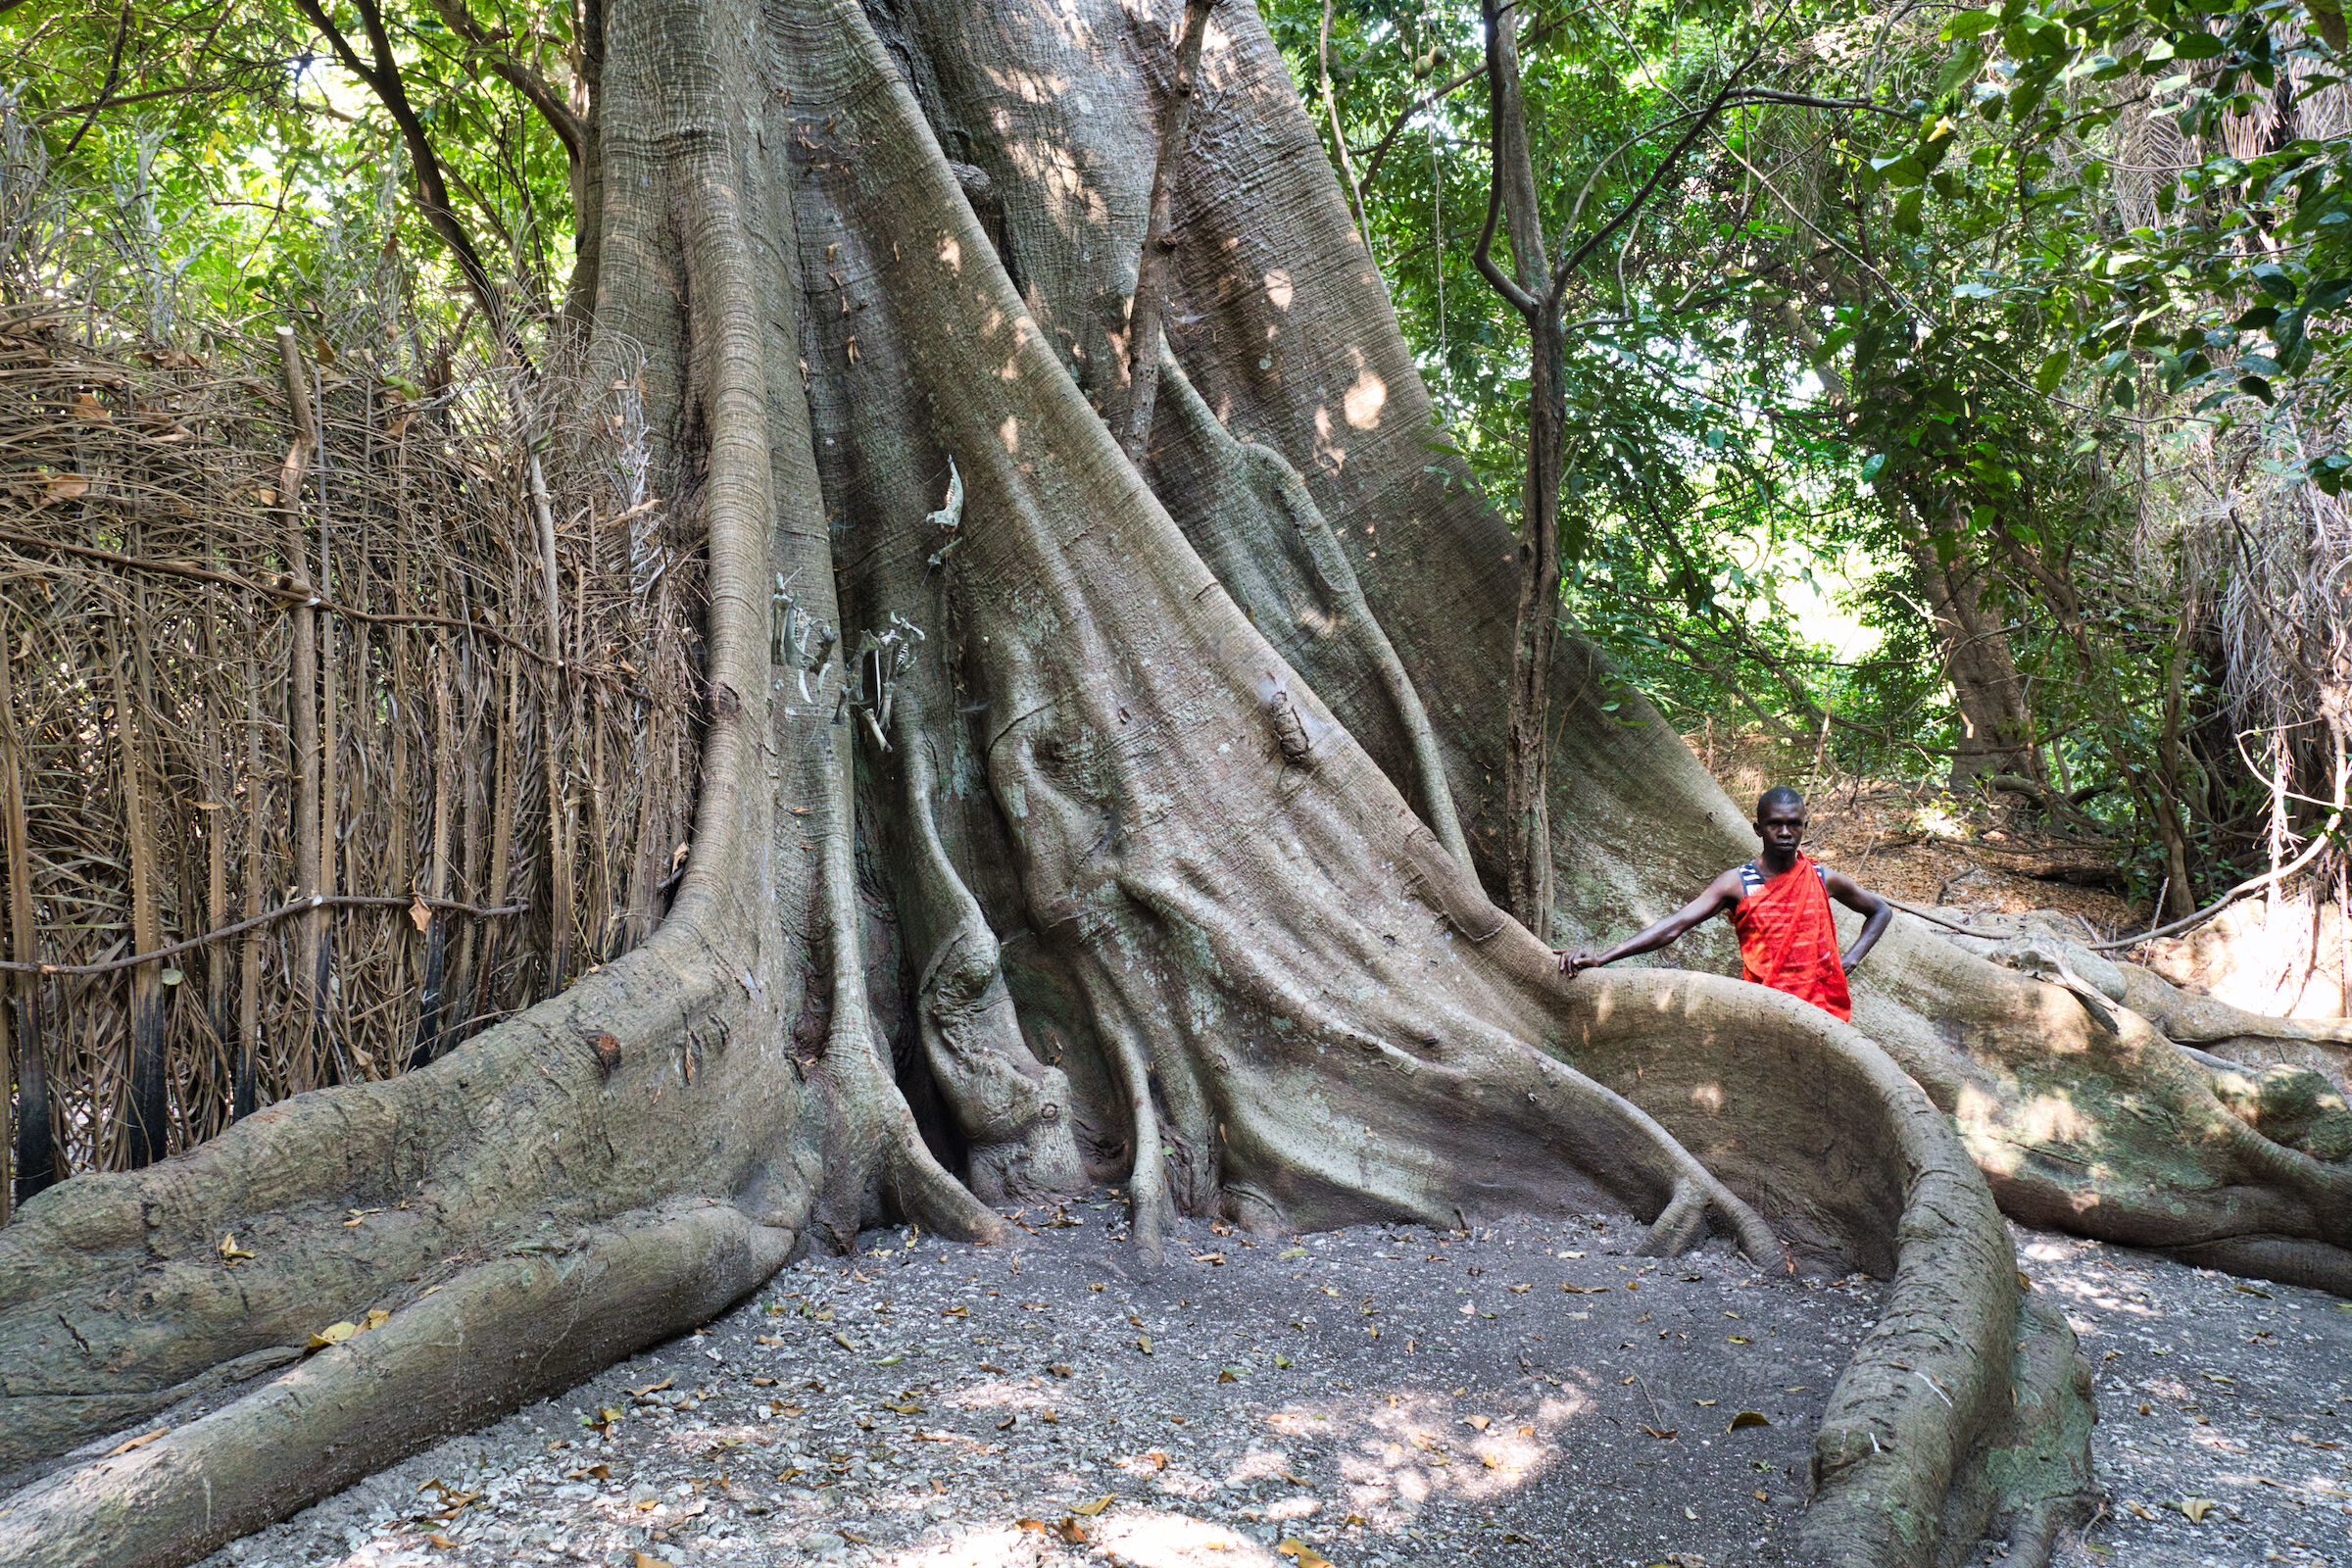 Kapokiers Trees (Ceiba pentandra)...